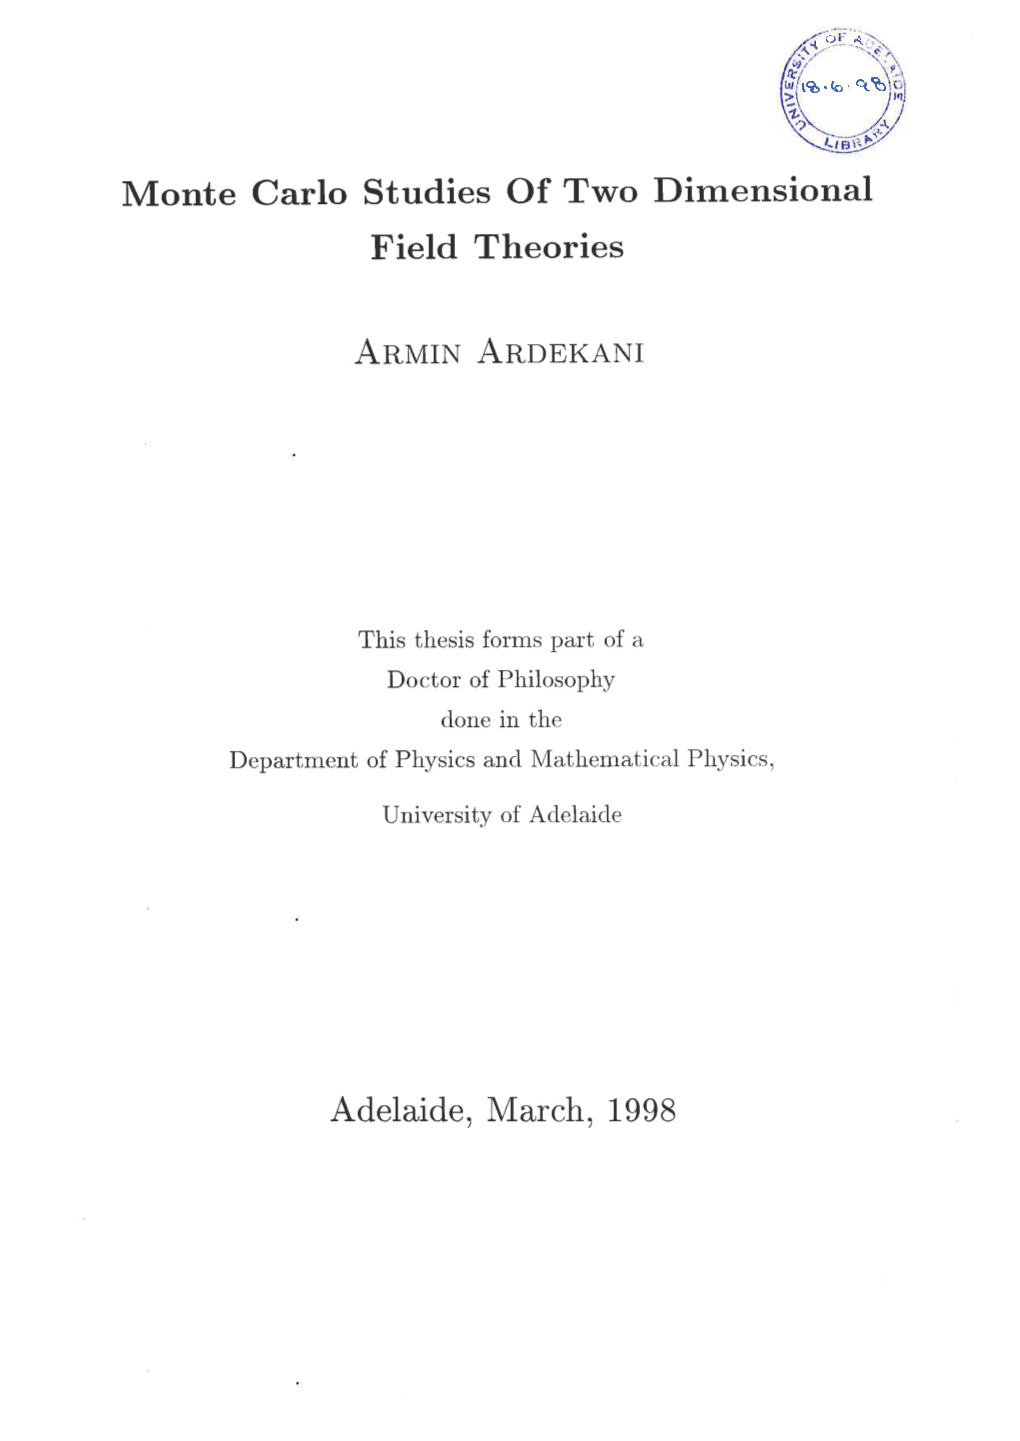 Monte Carlo Studies of Two Dimensional Field Theories